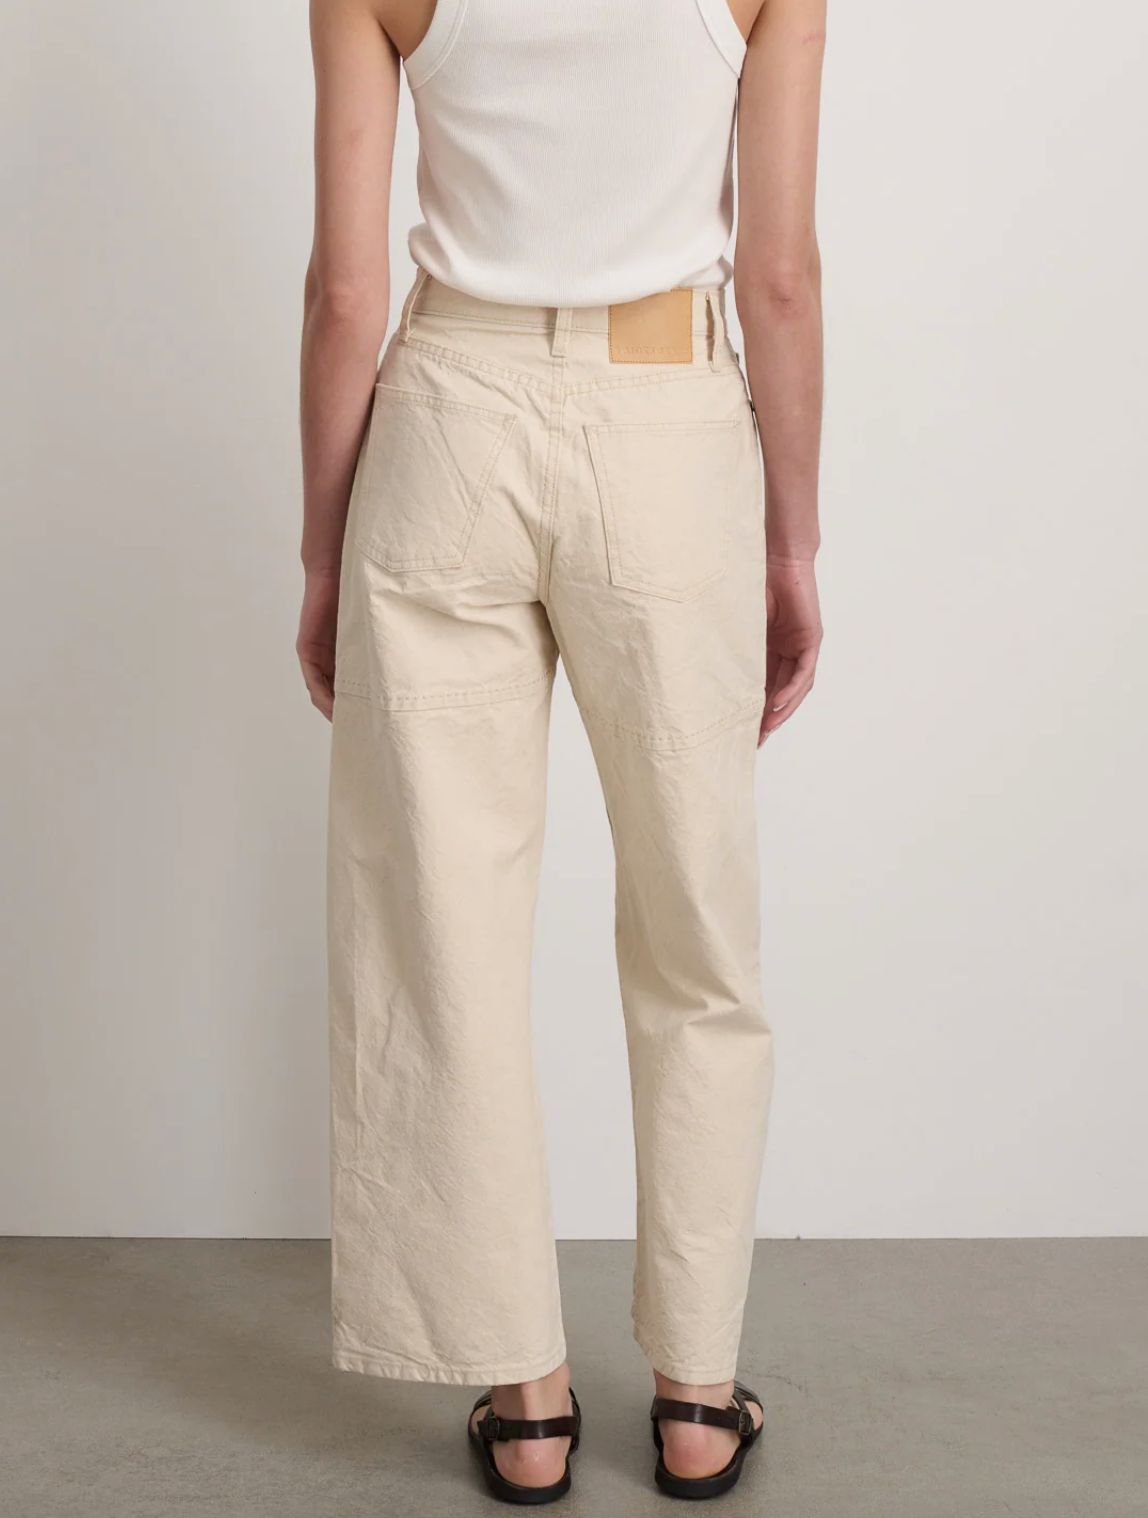 B Sides - Elissa Patch Pocket Mere White Jeans - Image 4